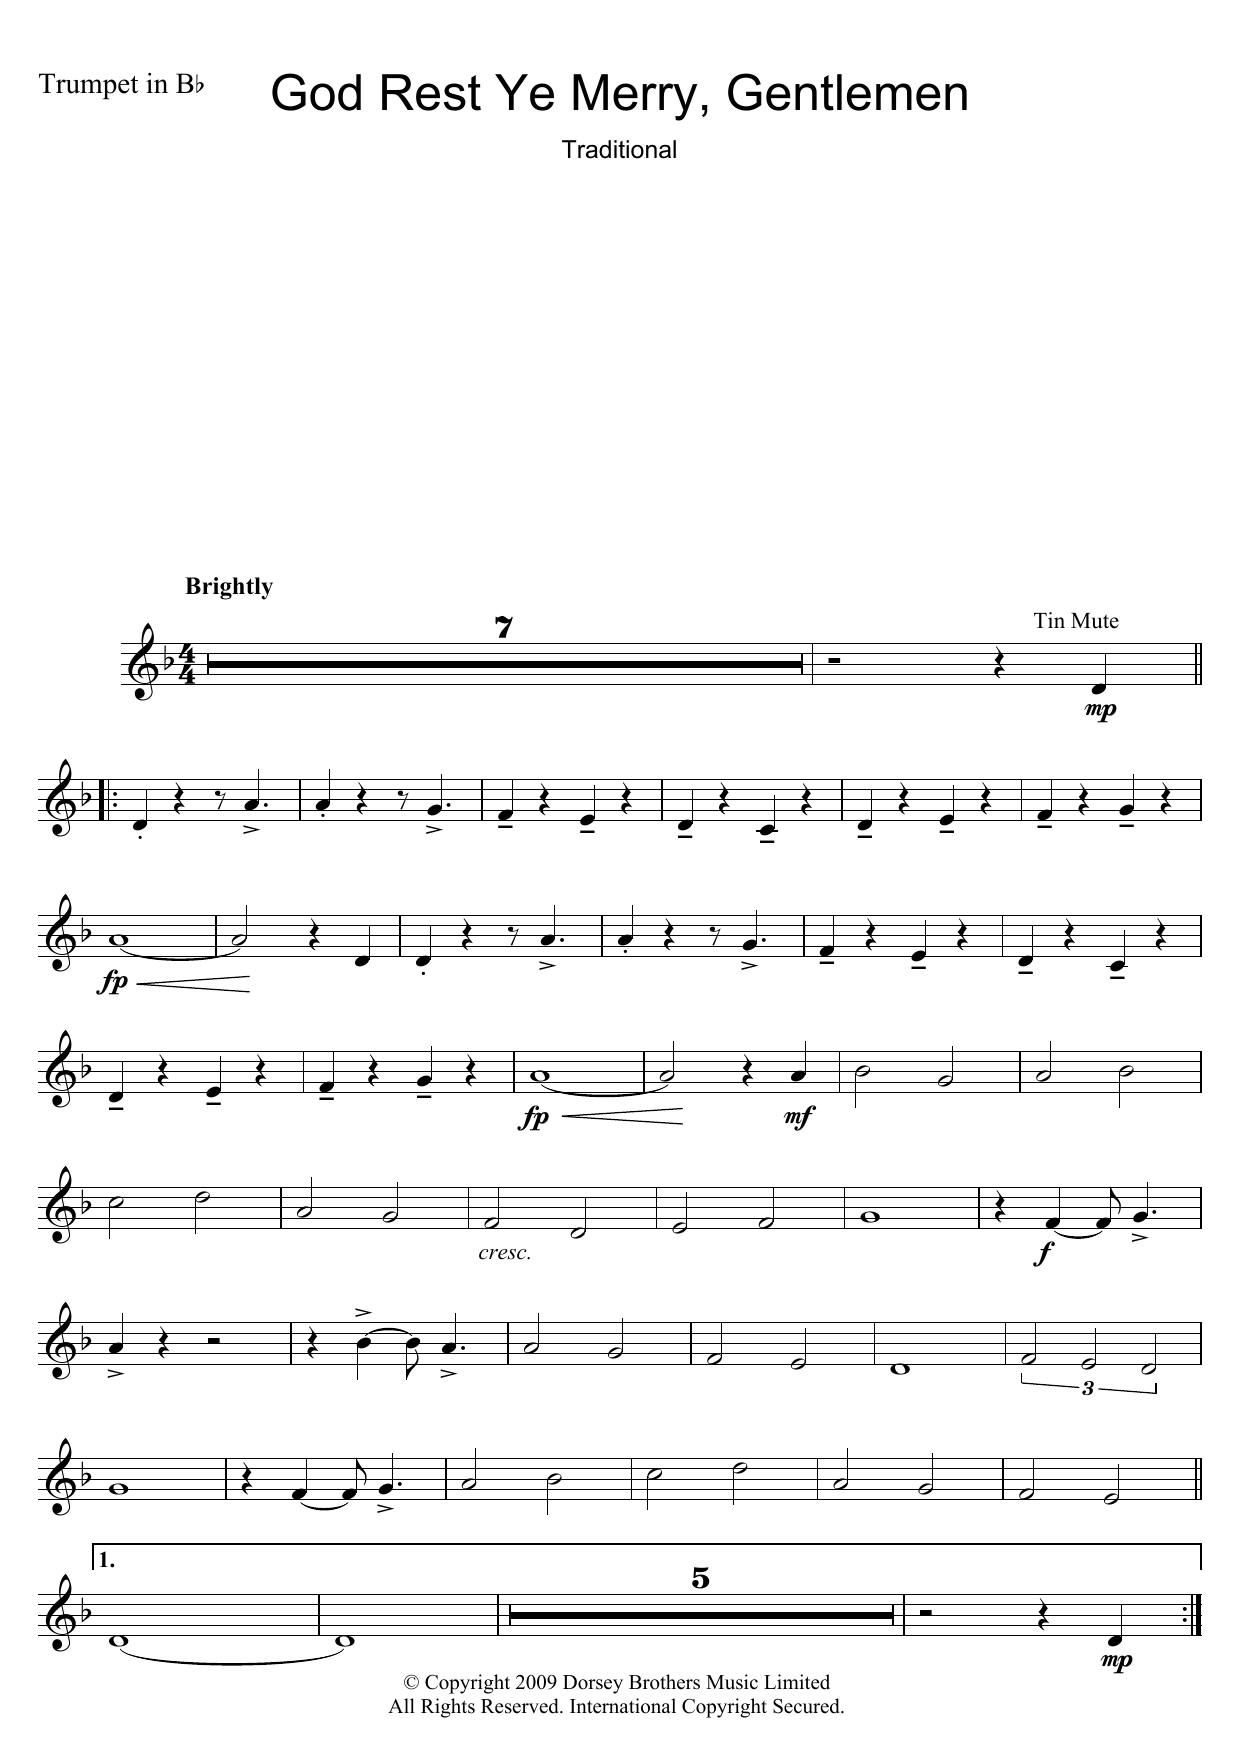 Traditional Carol God Rest Ye Merry, Gentlemen Sheet Music Notes & Chords for Flute - Download or Print PDF